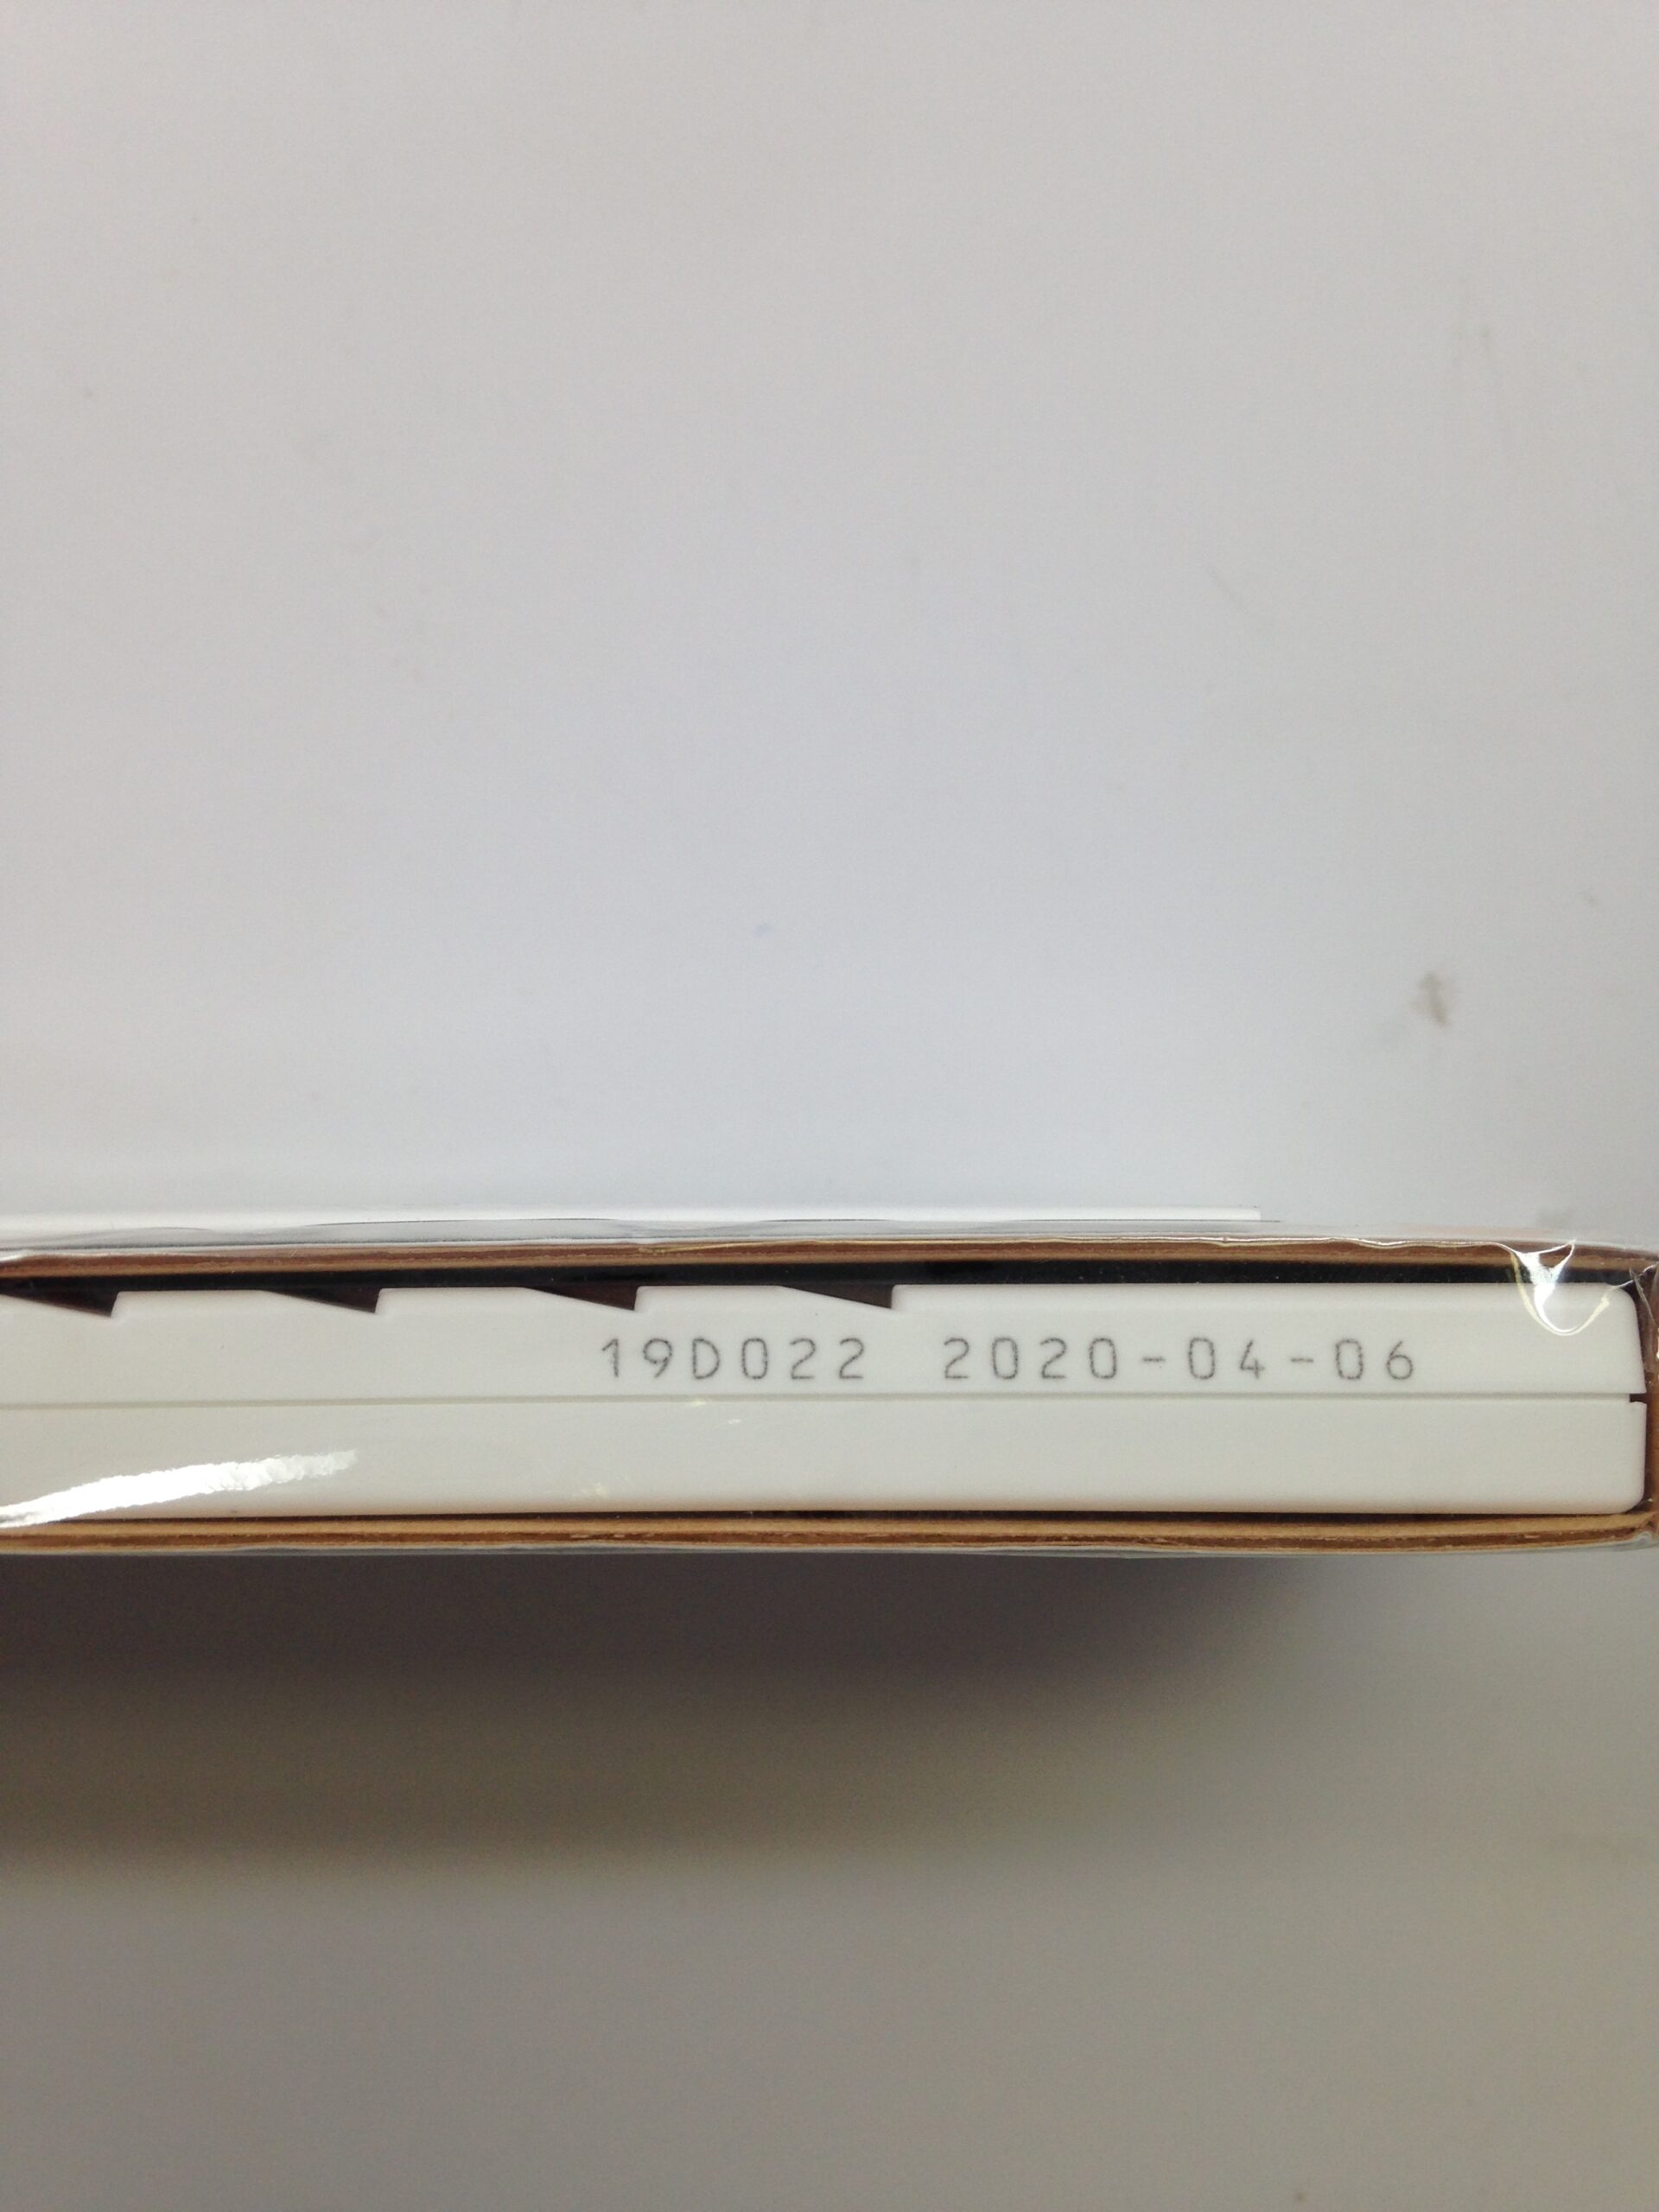 ASP 10133 STERRAD NX Cassette (X) - GB TECH USA